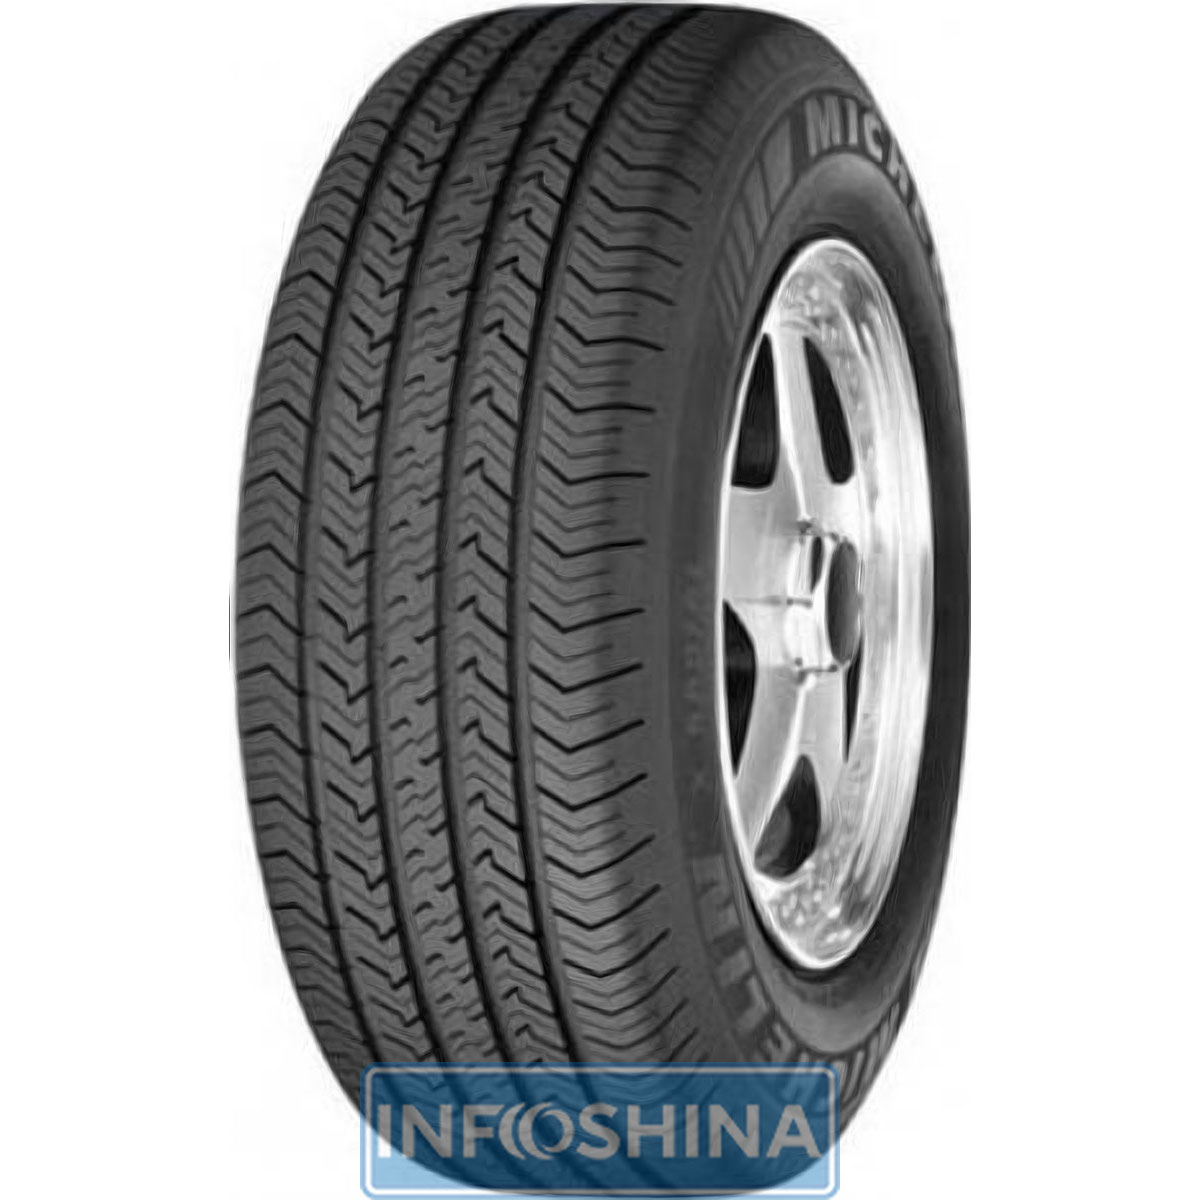 Купить шины Michelin X-Radial DT 205/60 R15 90S